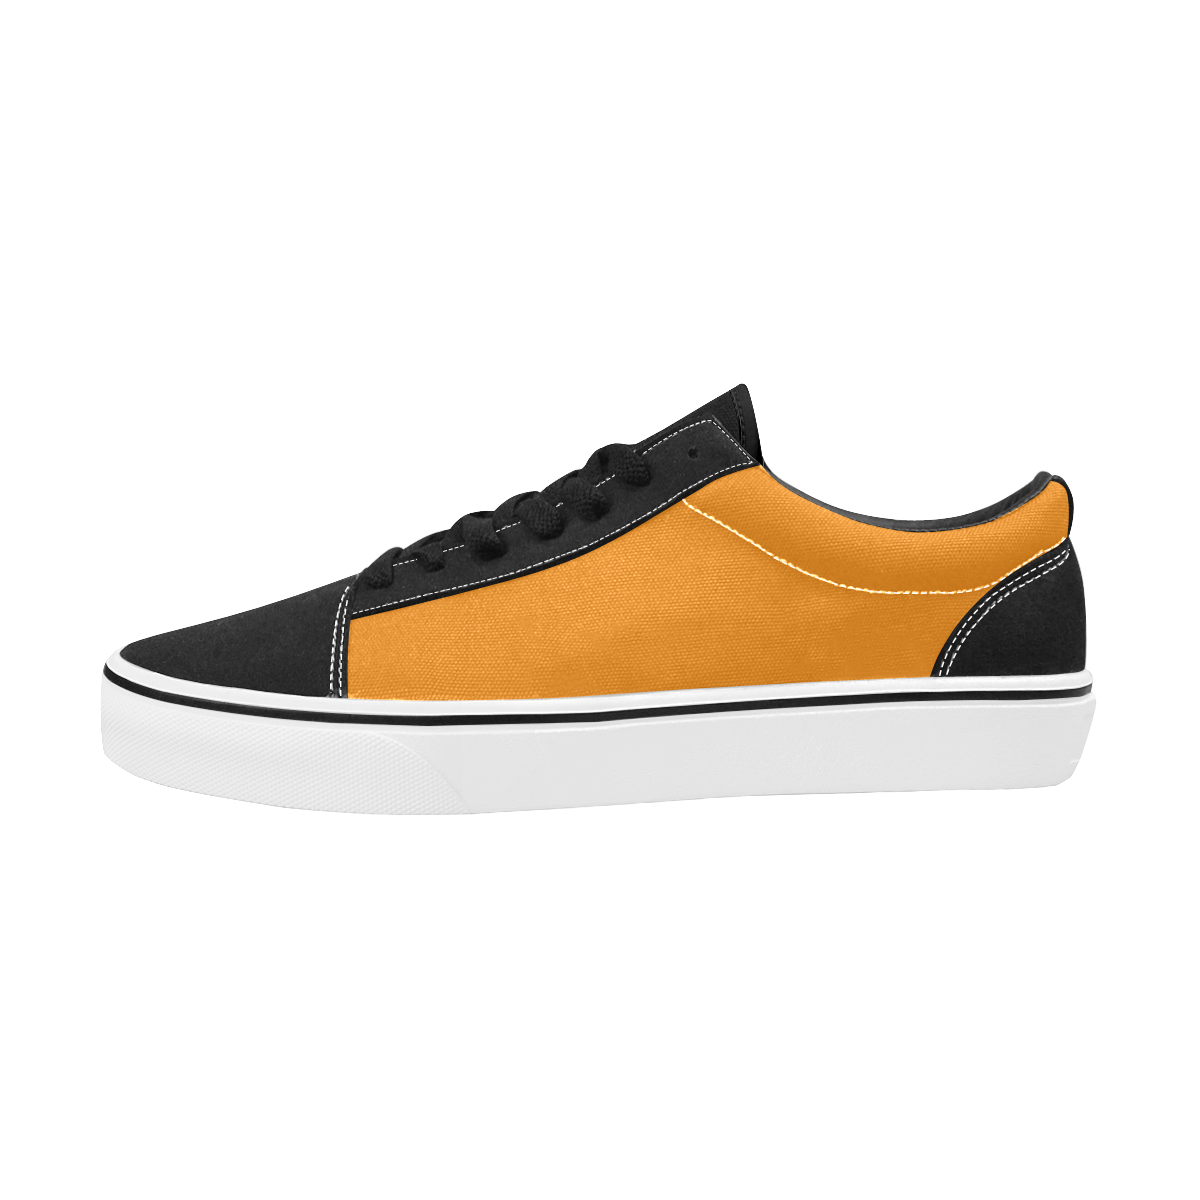 FAT BOY - Cali Orange Bud Hybrid Skateboard Shoes Men's Low Top Skateboarding Shoes (Model E001-2)